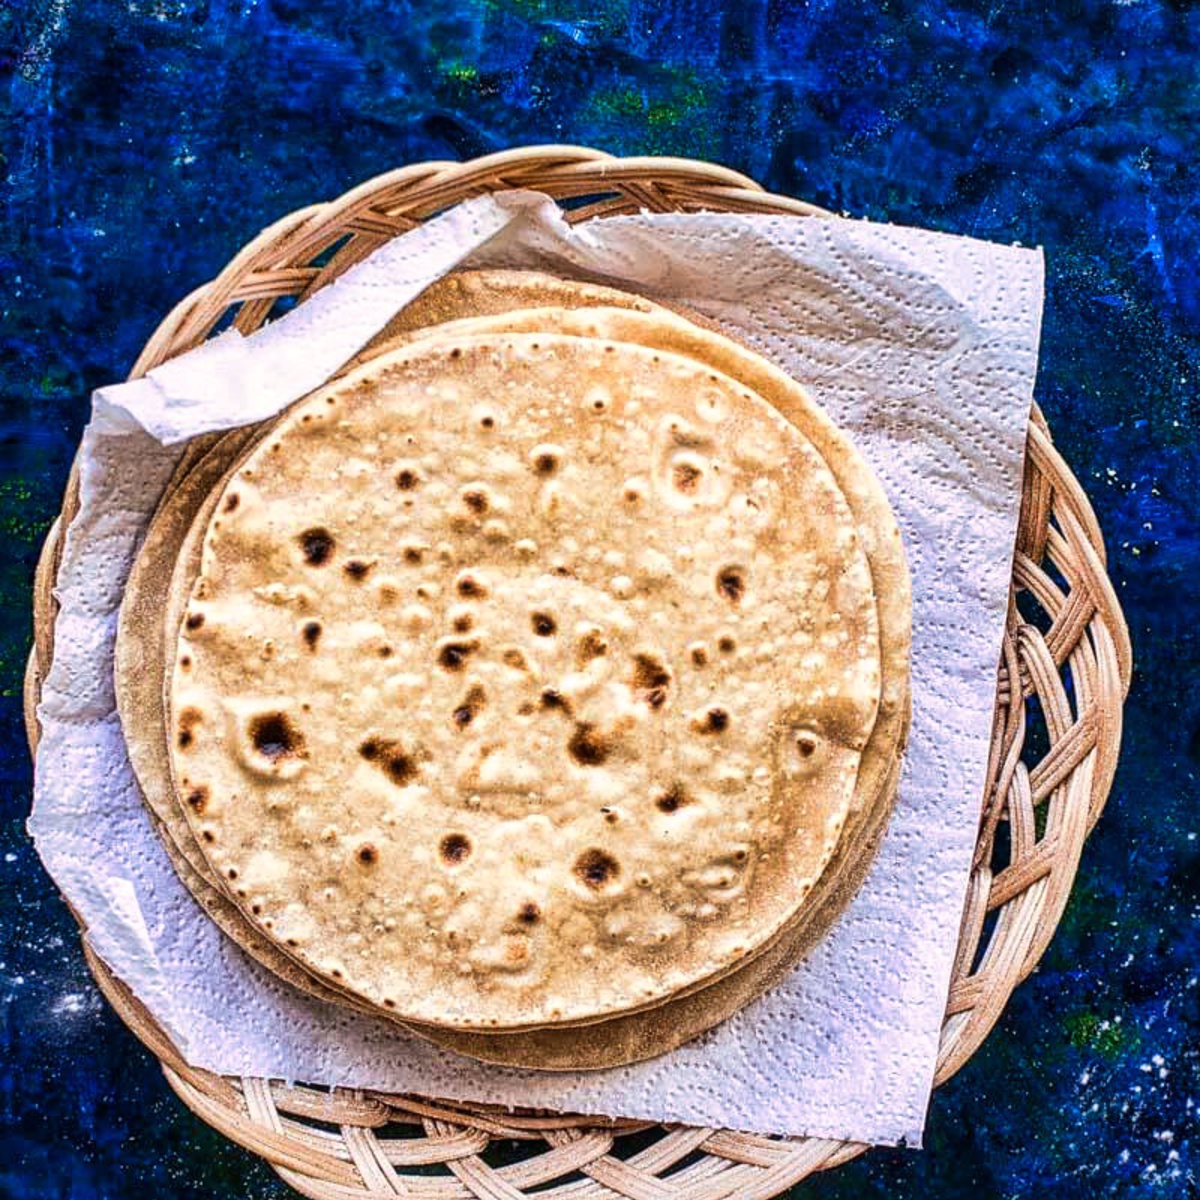 https://www.mygingergarlickitchen.com/wp-content/rich-markup-images/1x1/1x1-how-to-make-soft-roti-phulka-recipe-chapati-video-recipe.jpg